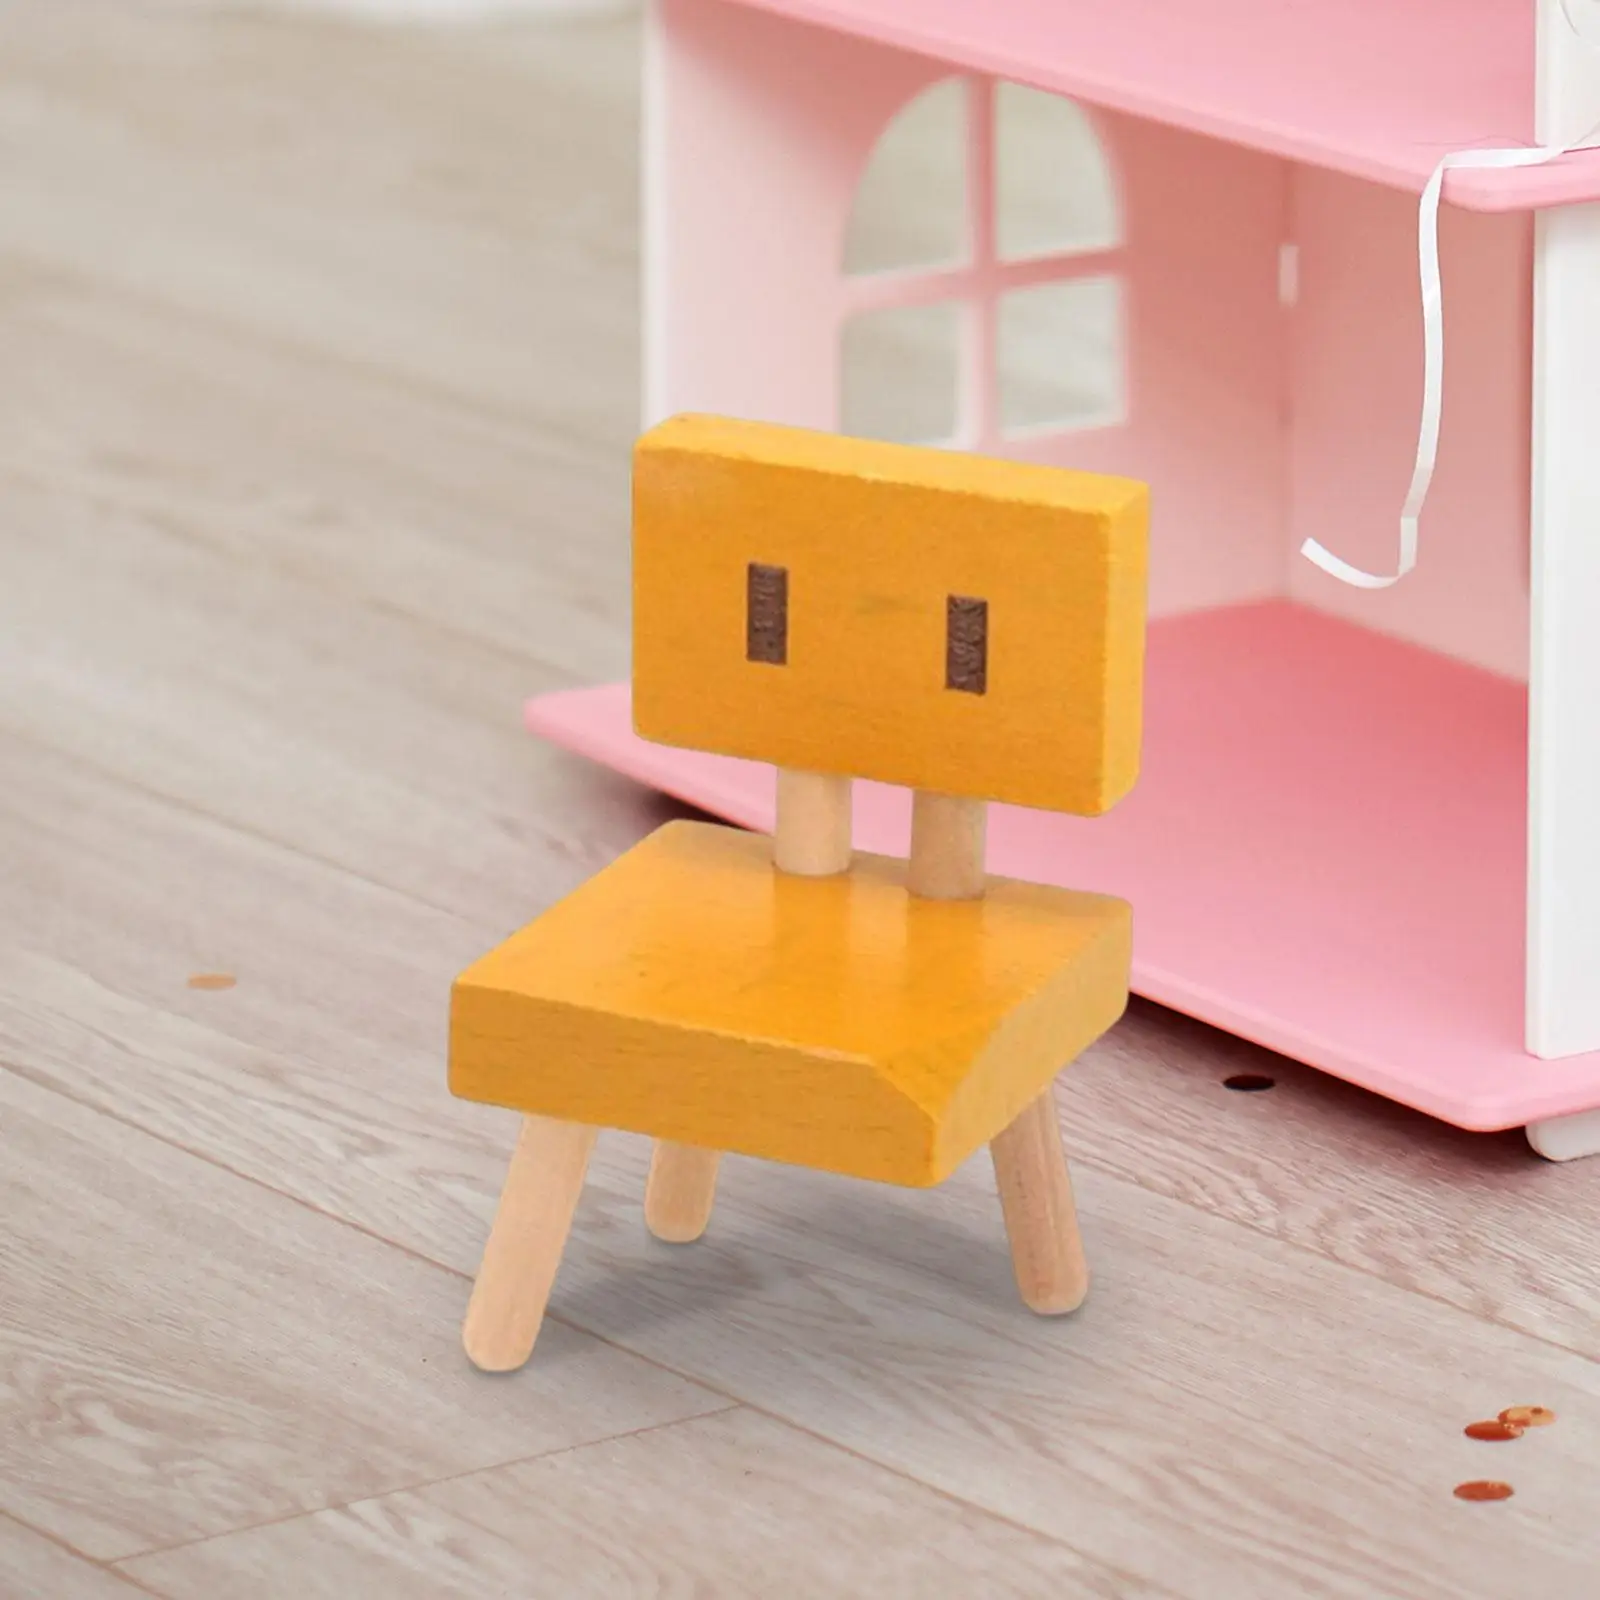 Mini Small Chair Ornament Anime Peripherals Centerpiece Figurines Dollhouse Accessories Desktop Mini Chair for Office Decoration